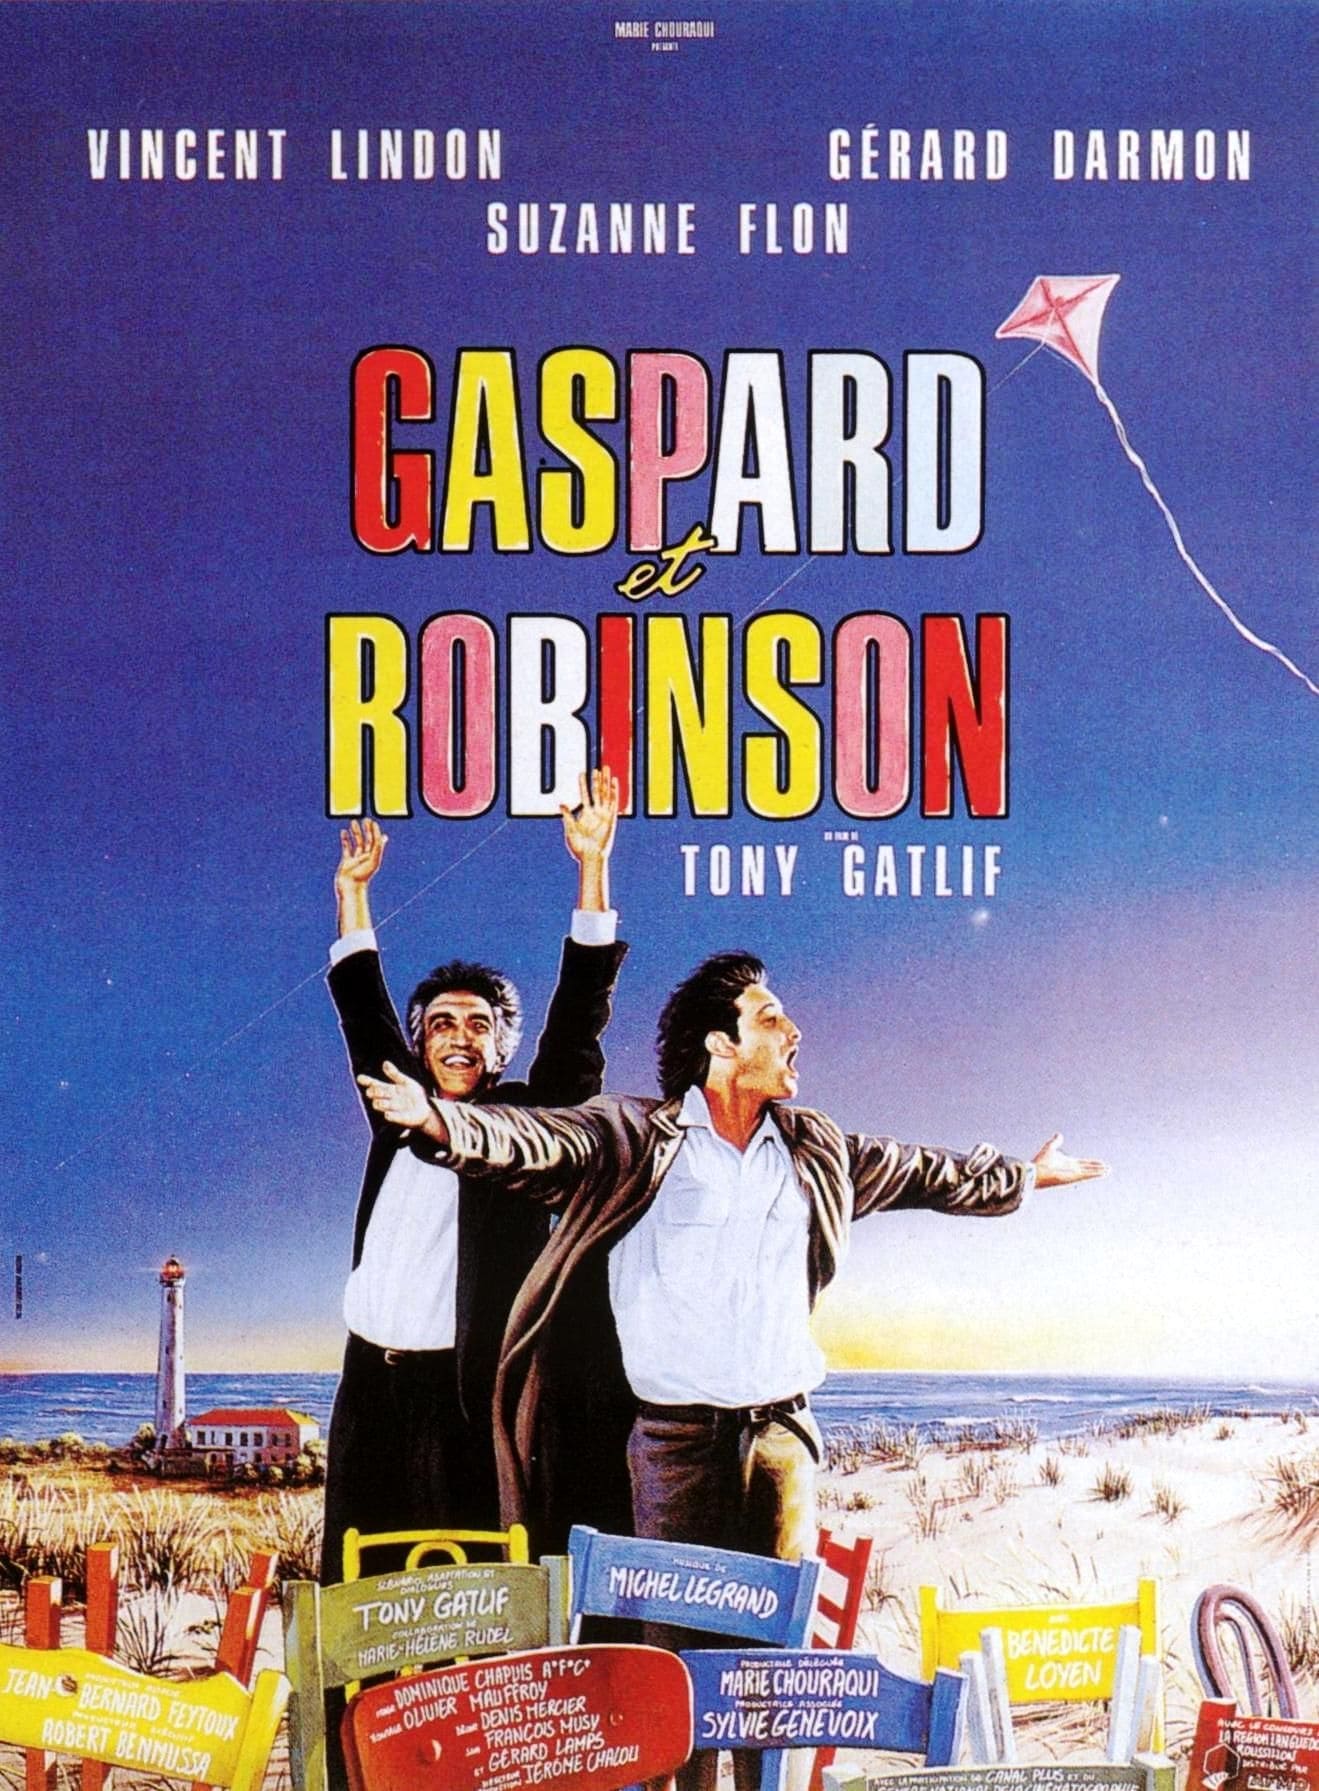 Gaspard and Robinson